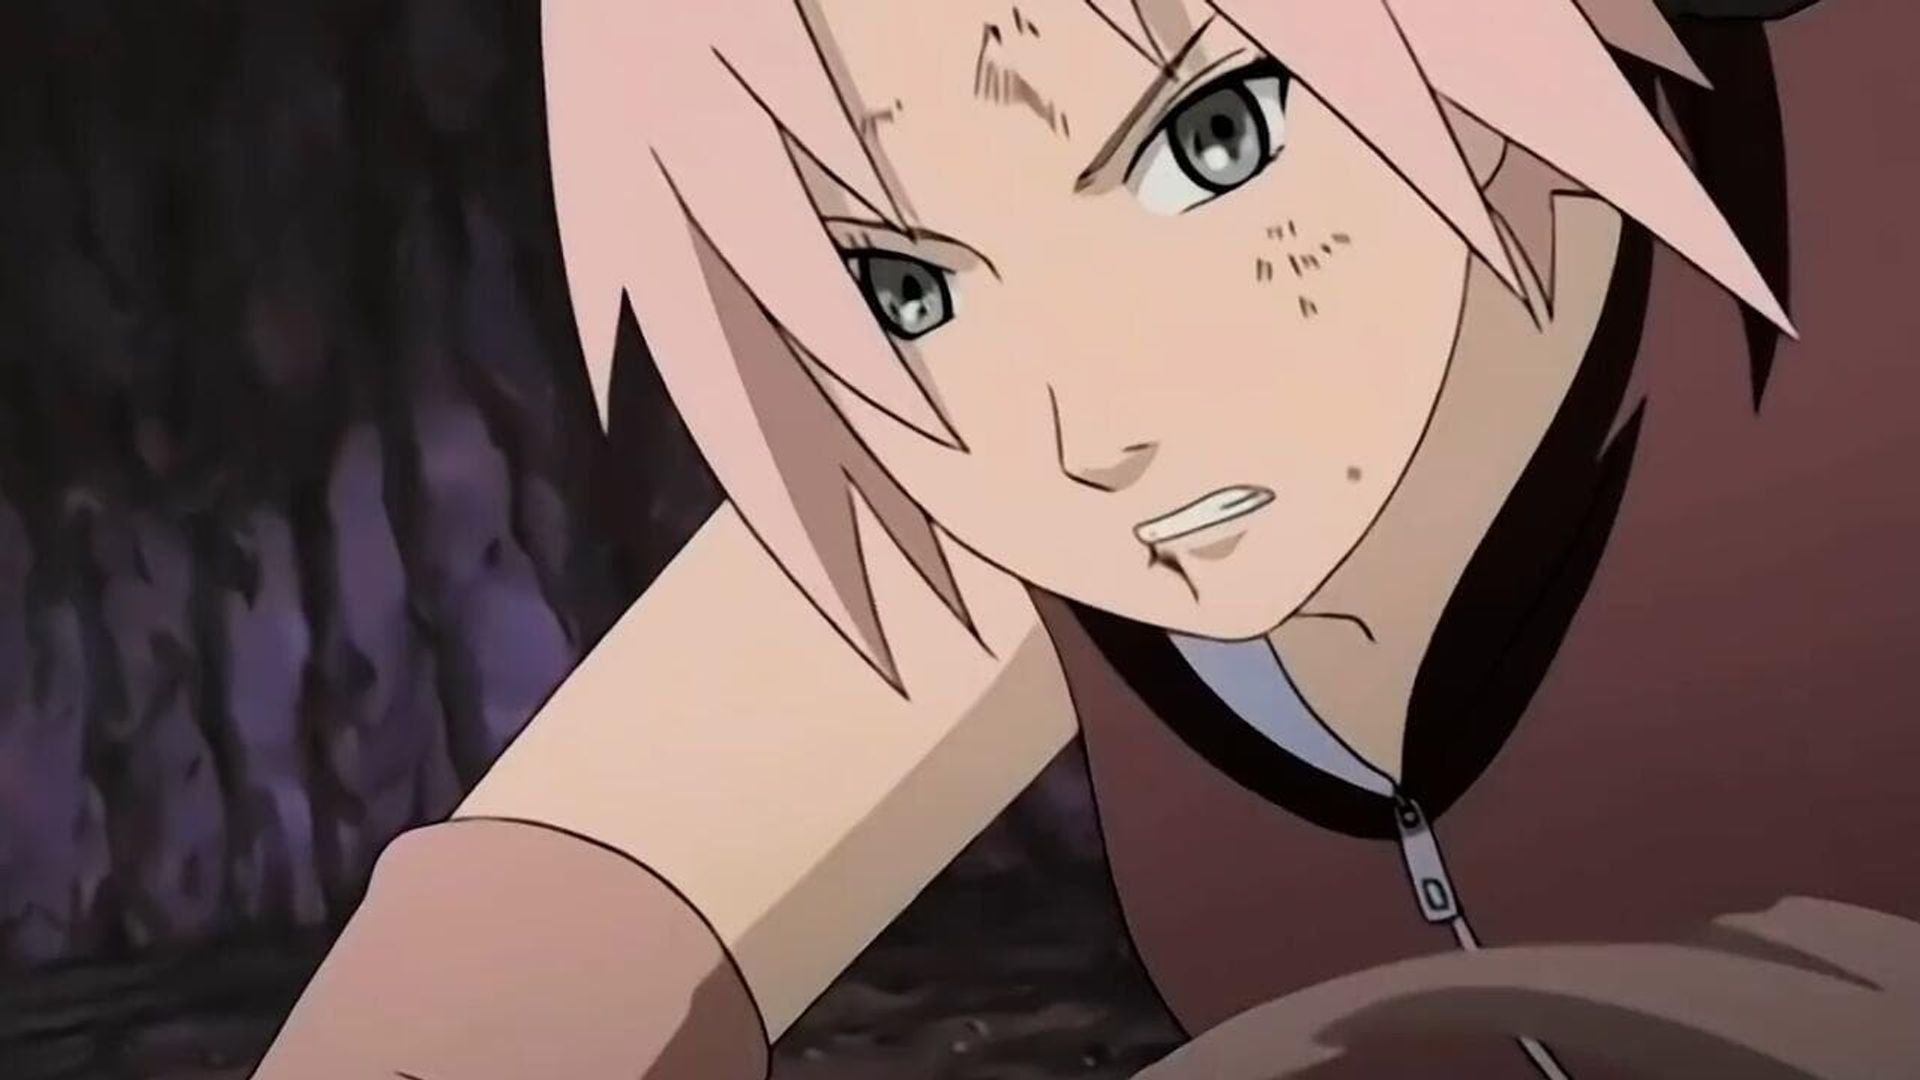 Naruto: Shippuden background